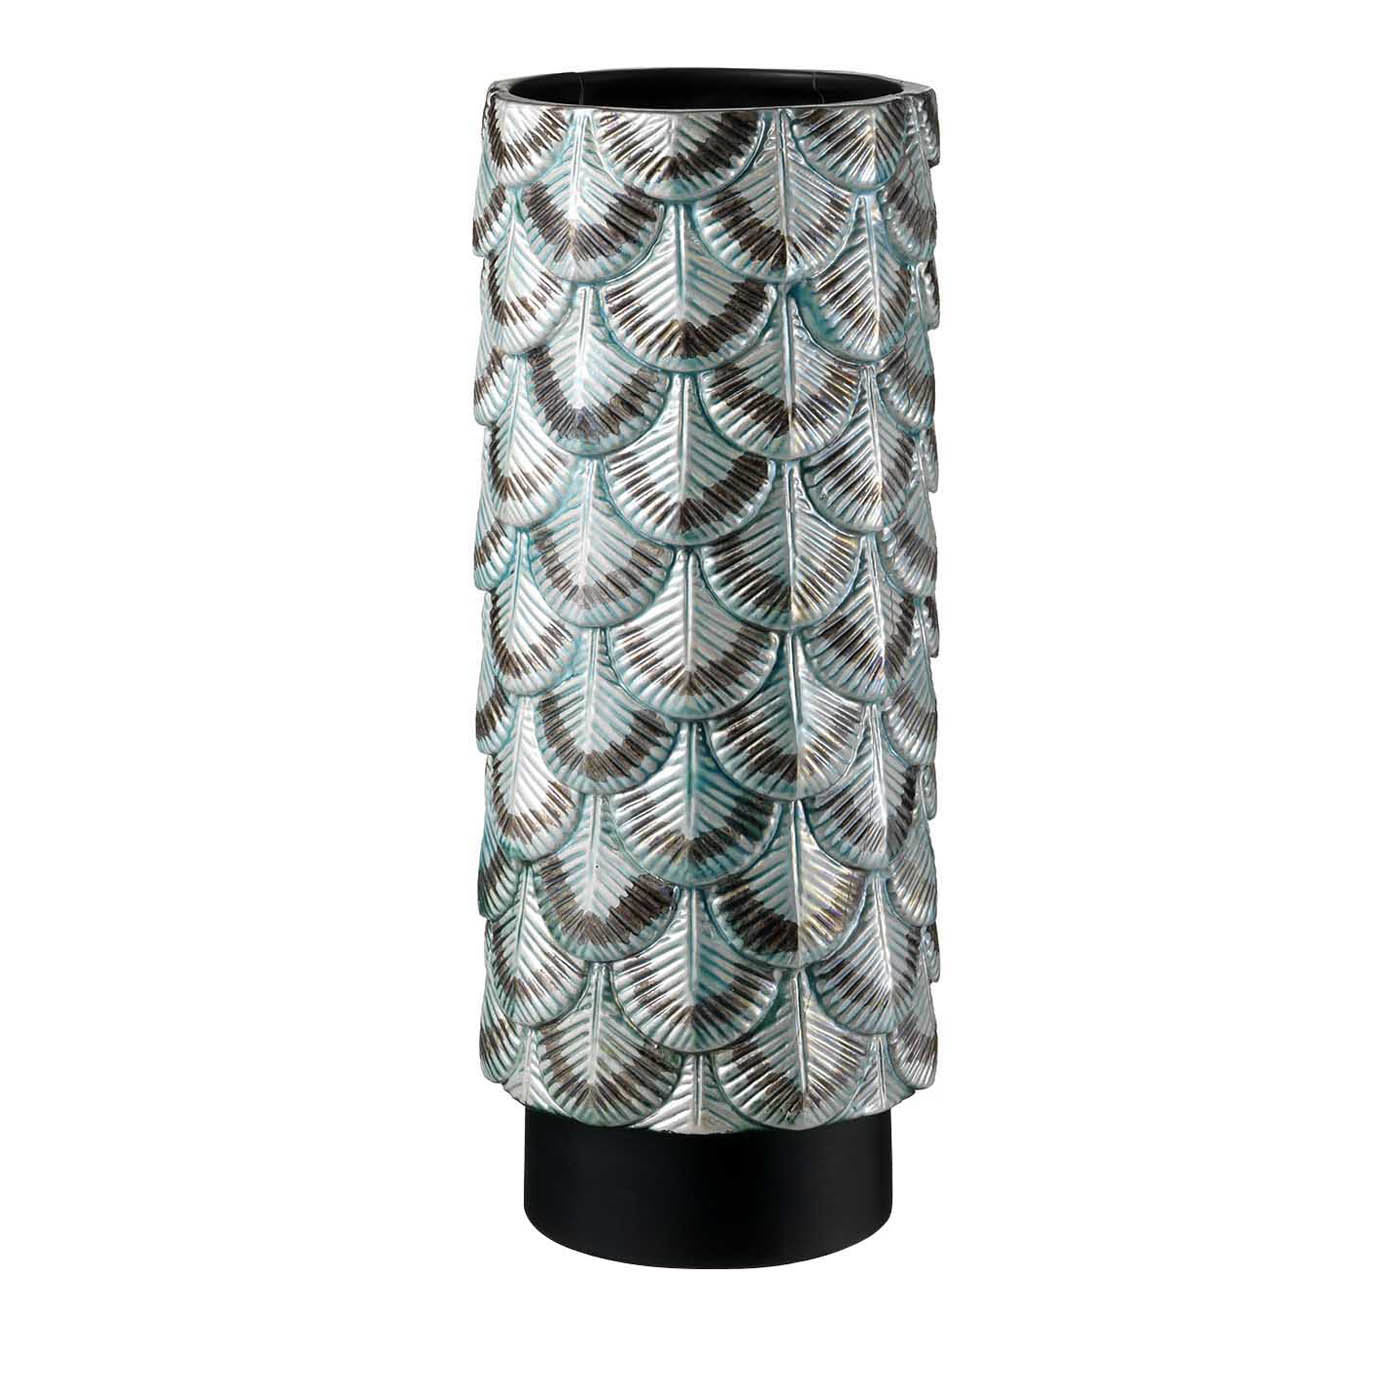 Green and Silver Plumage Vase - Botteganove